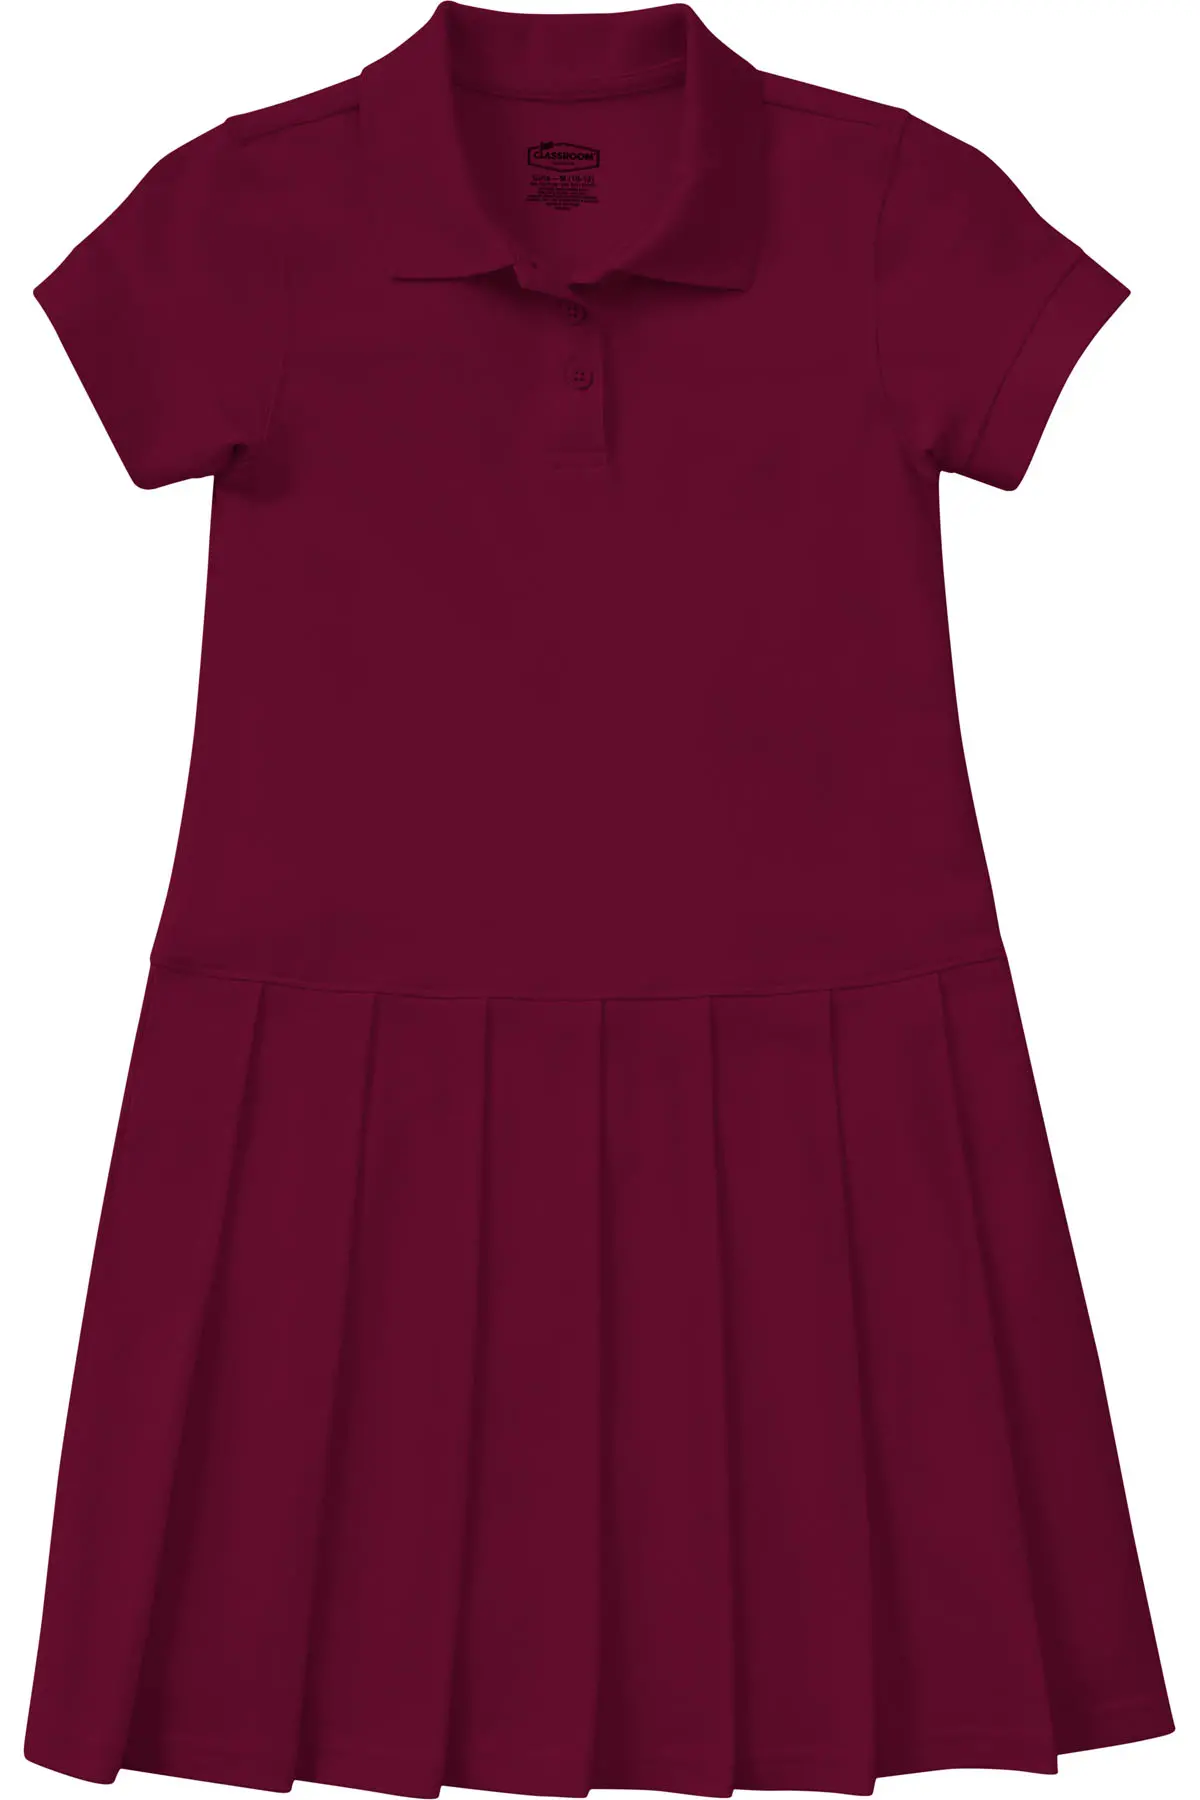 Girls Pique Polo Dress-Classroom Uniforms